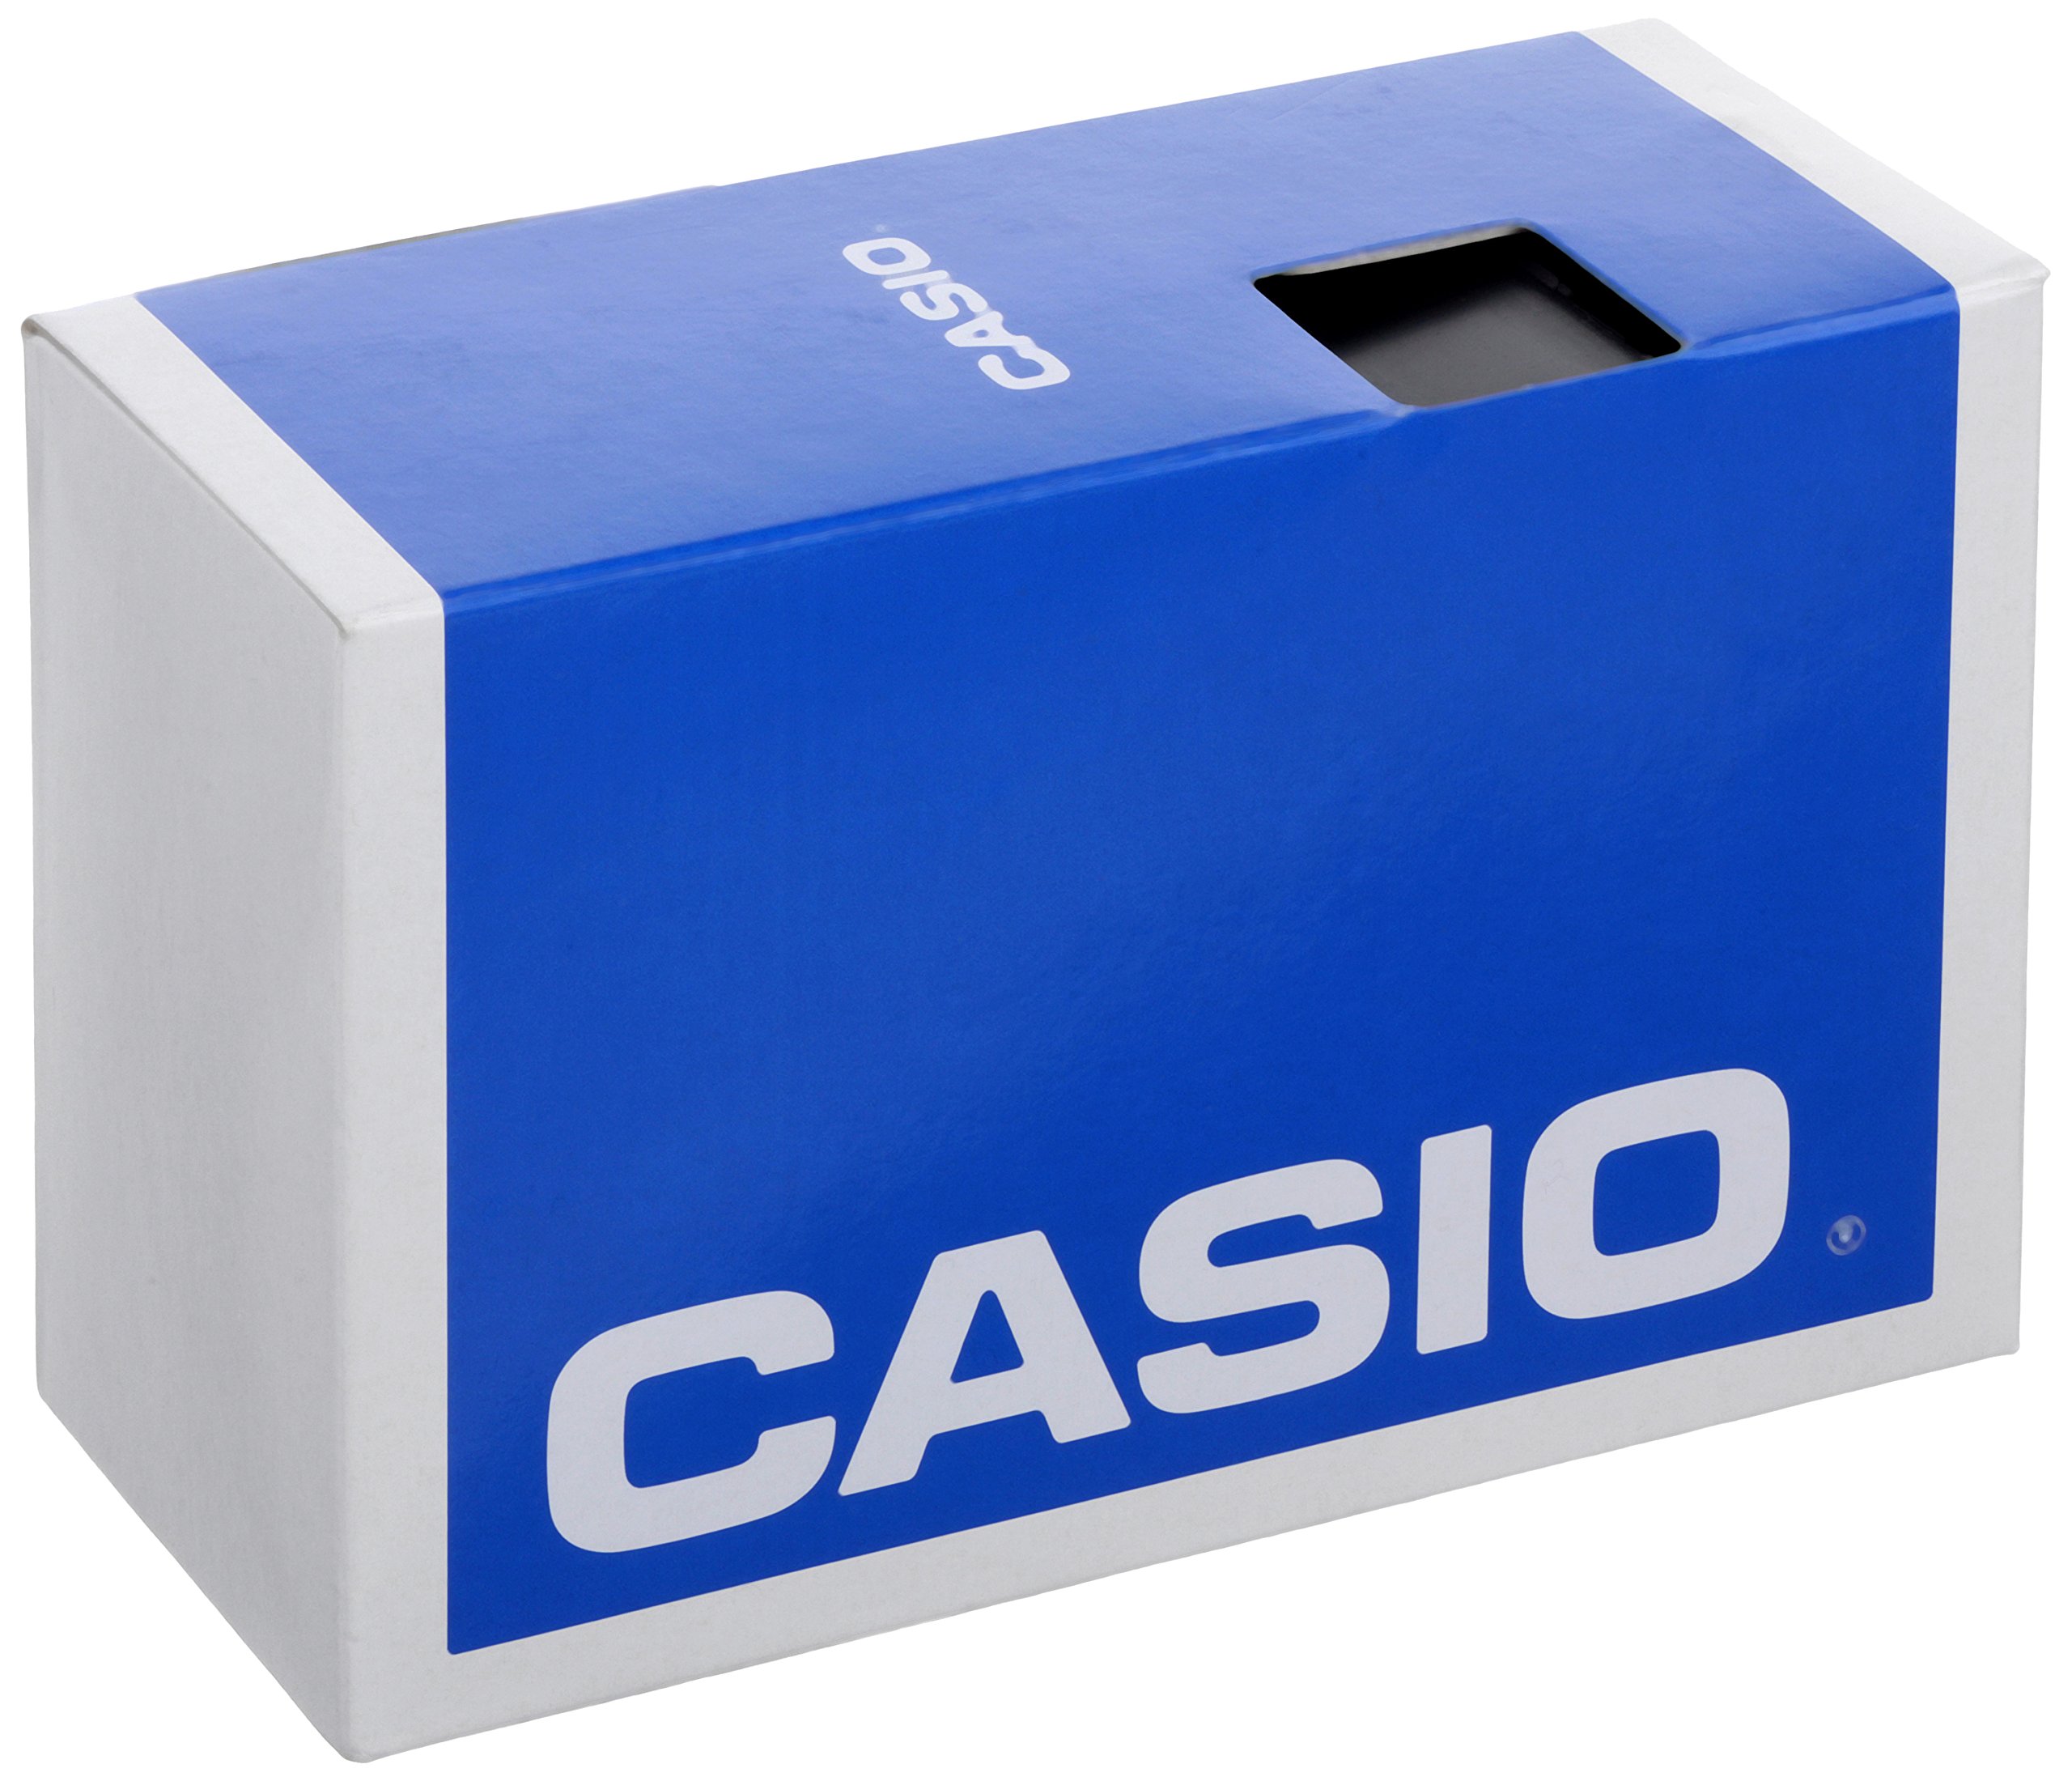 Casio Men's WV58A-1AVCR Waveceptor Black Resin Band Digital Watch